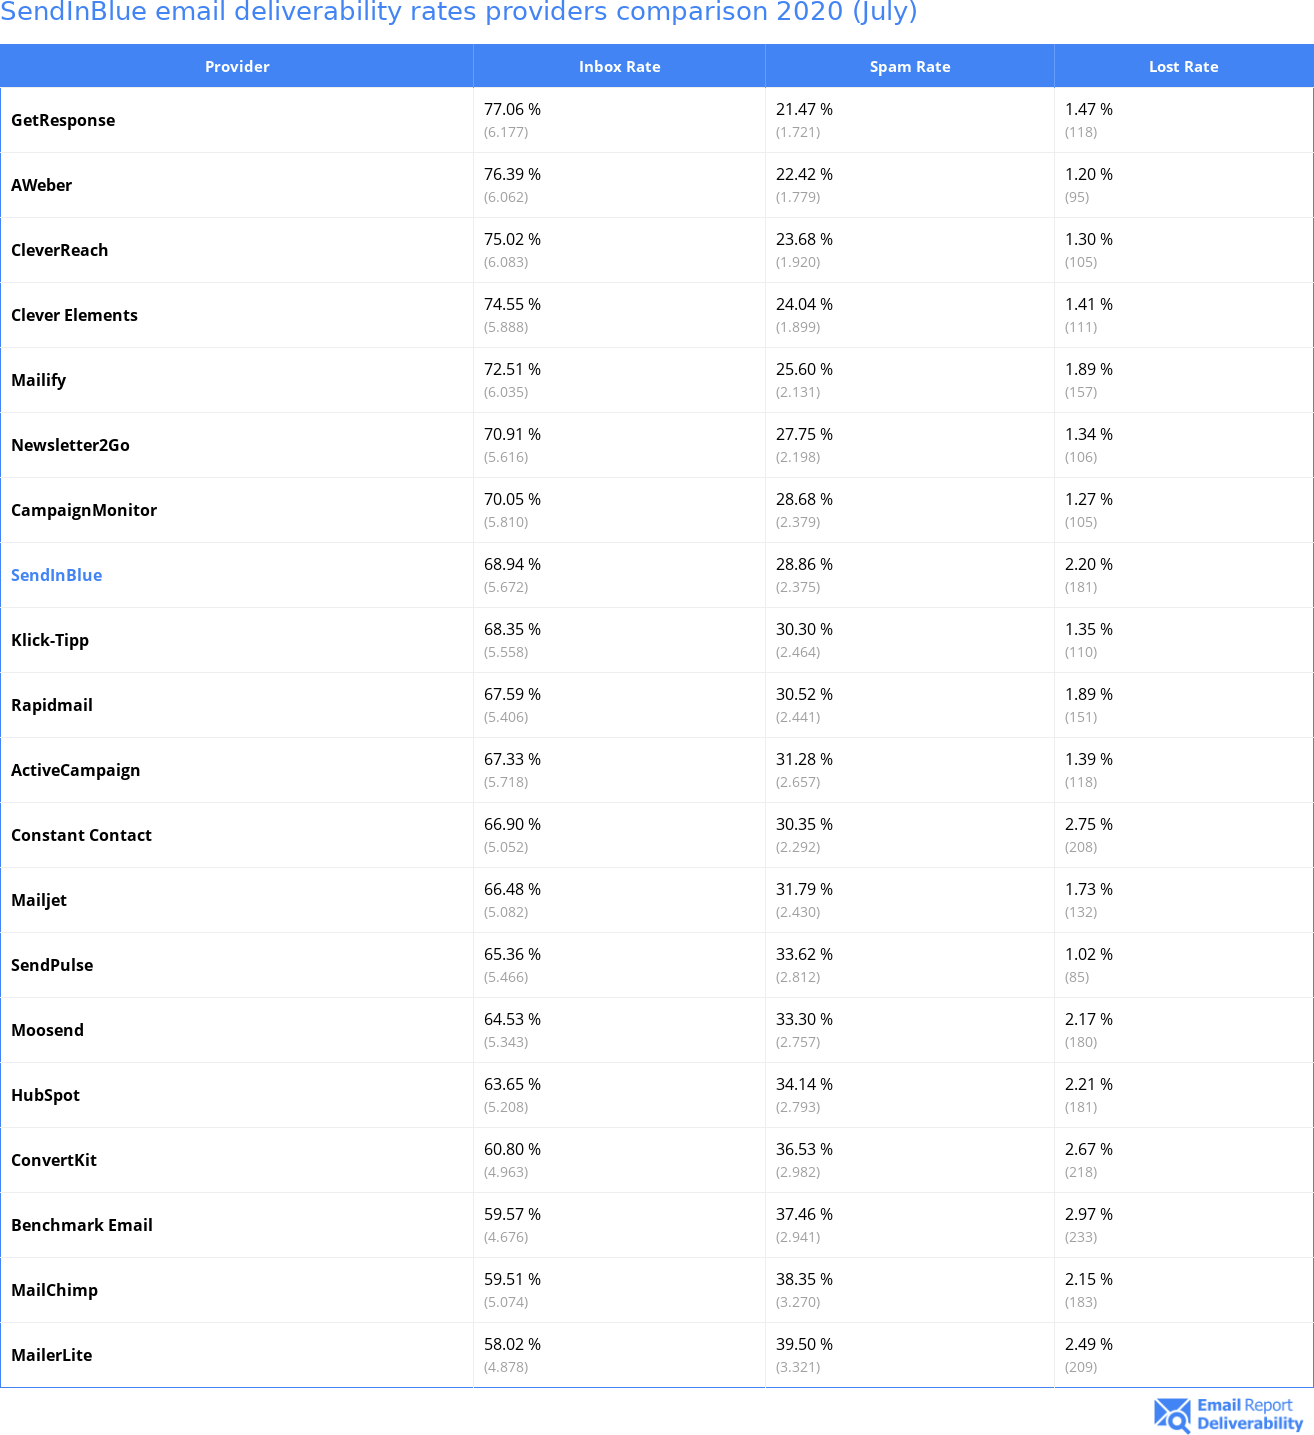 SendInBlue email deliverability rates providers comparison 2020 (July)